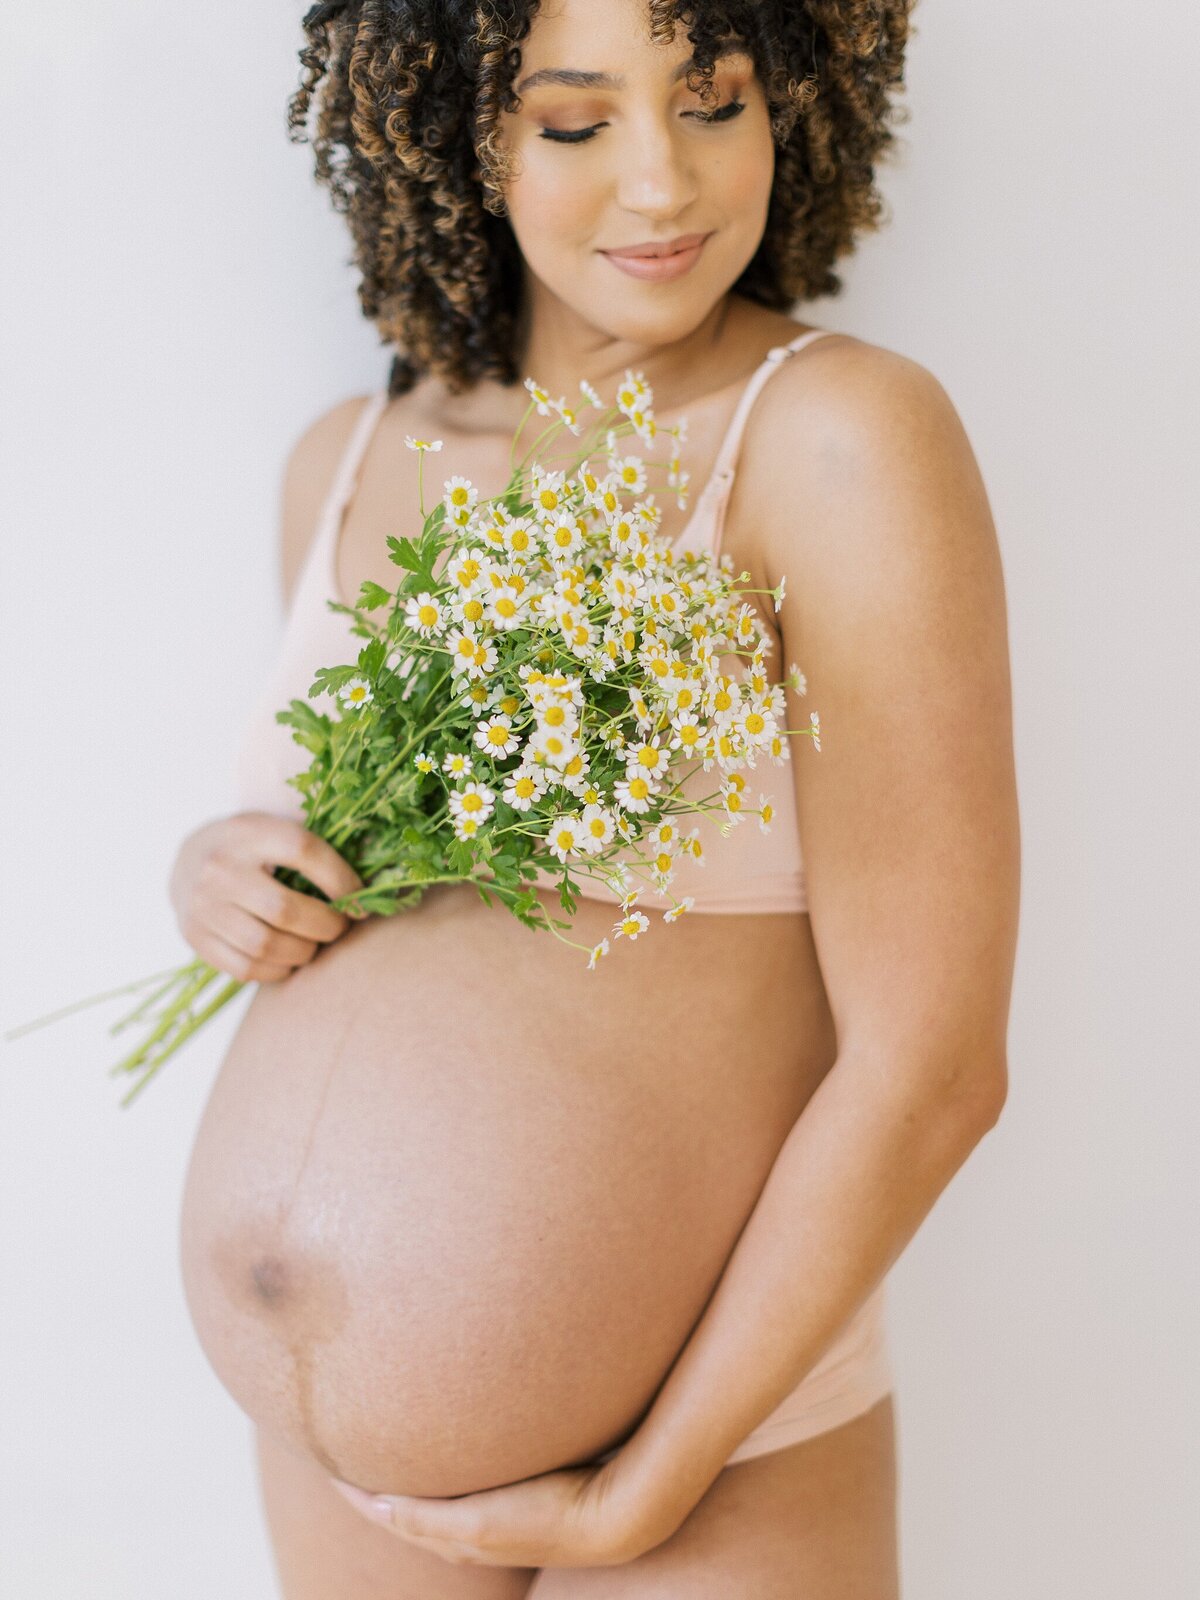 portland-studio-maternity-photos-shaunae-teske-photography-21-1